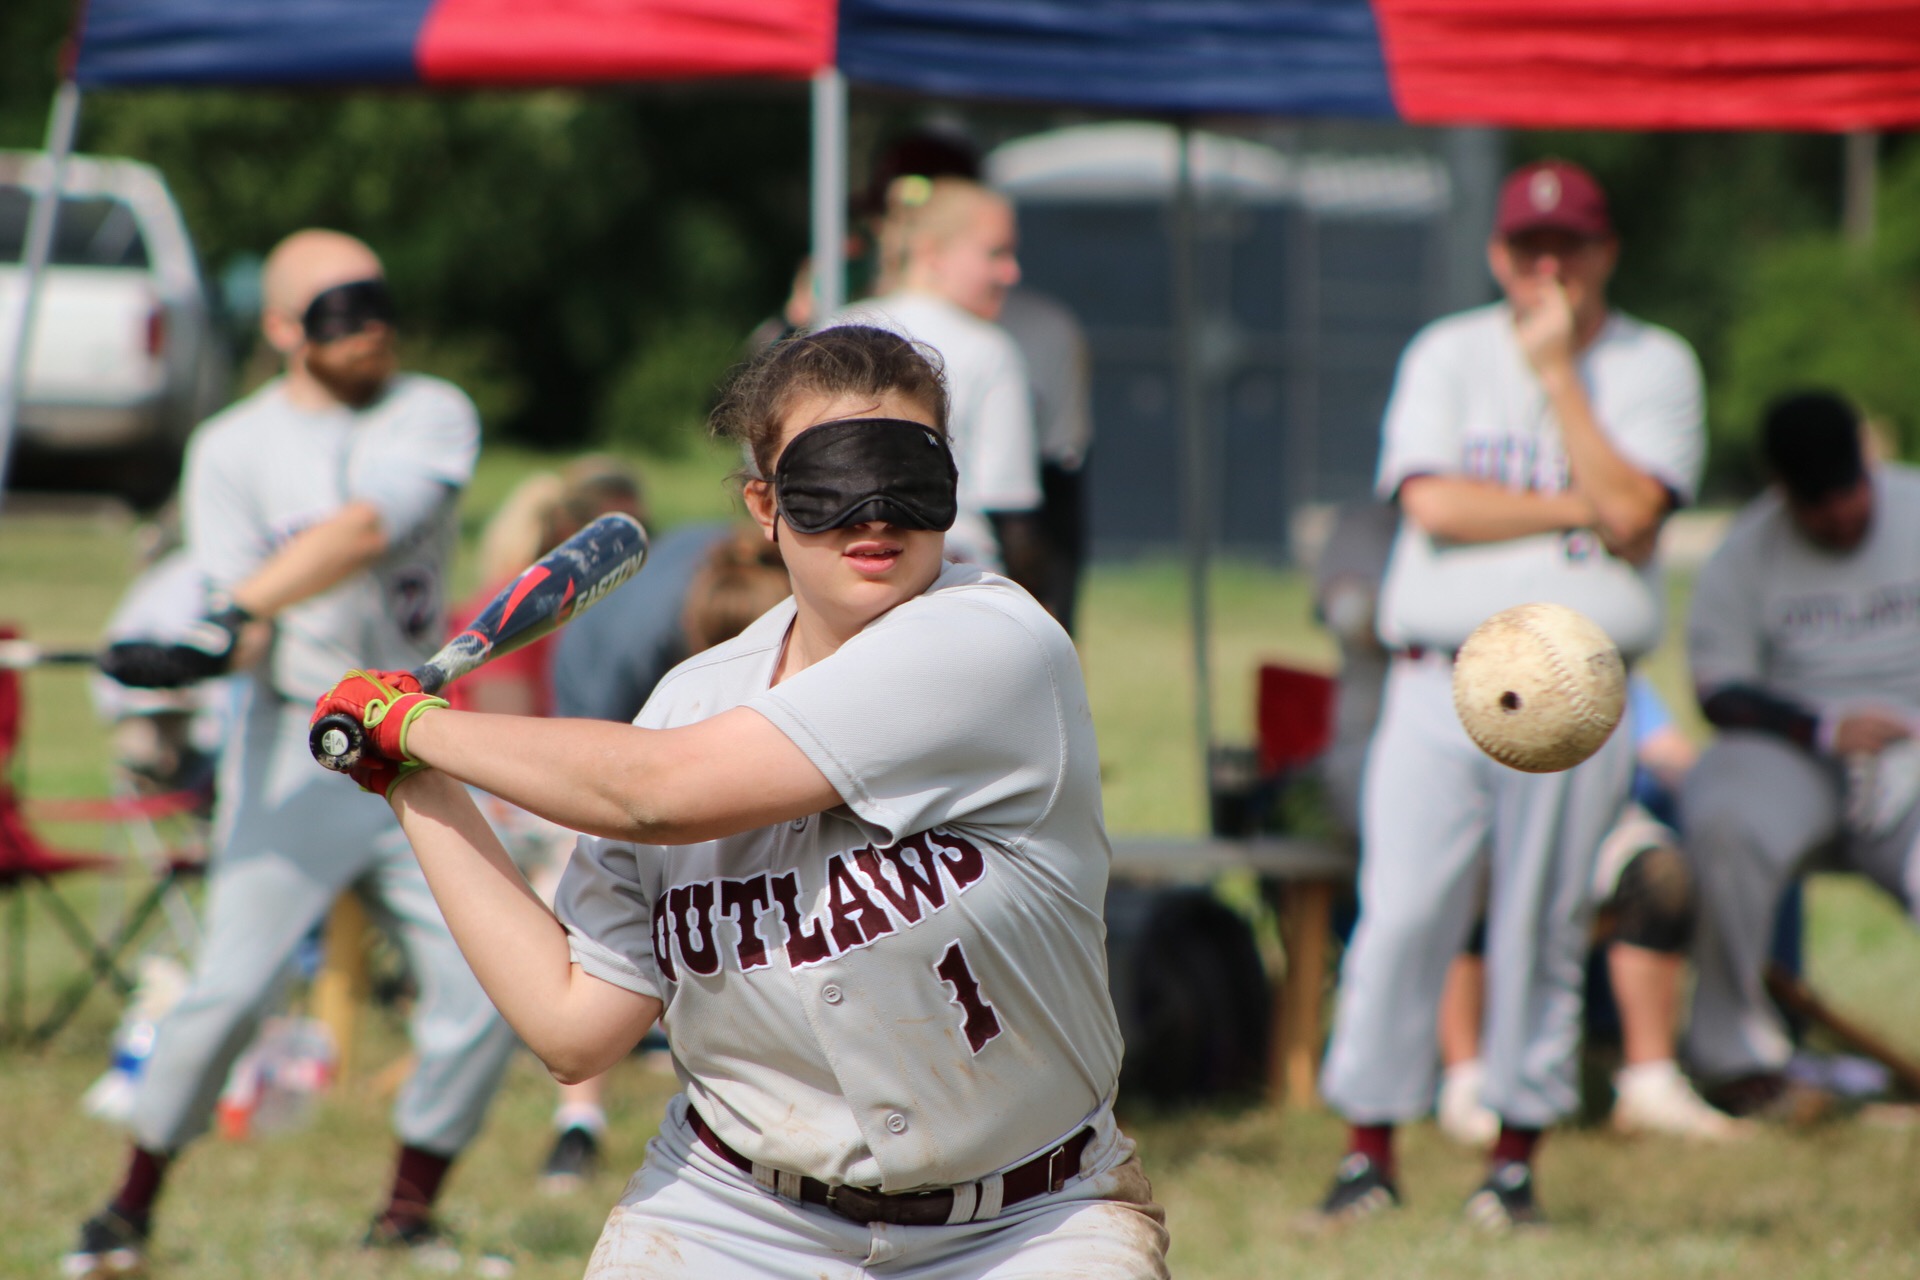 BCS Outlaw's Abigail Junek swings a bat towards the beep baseball hurtling towards her.